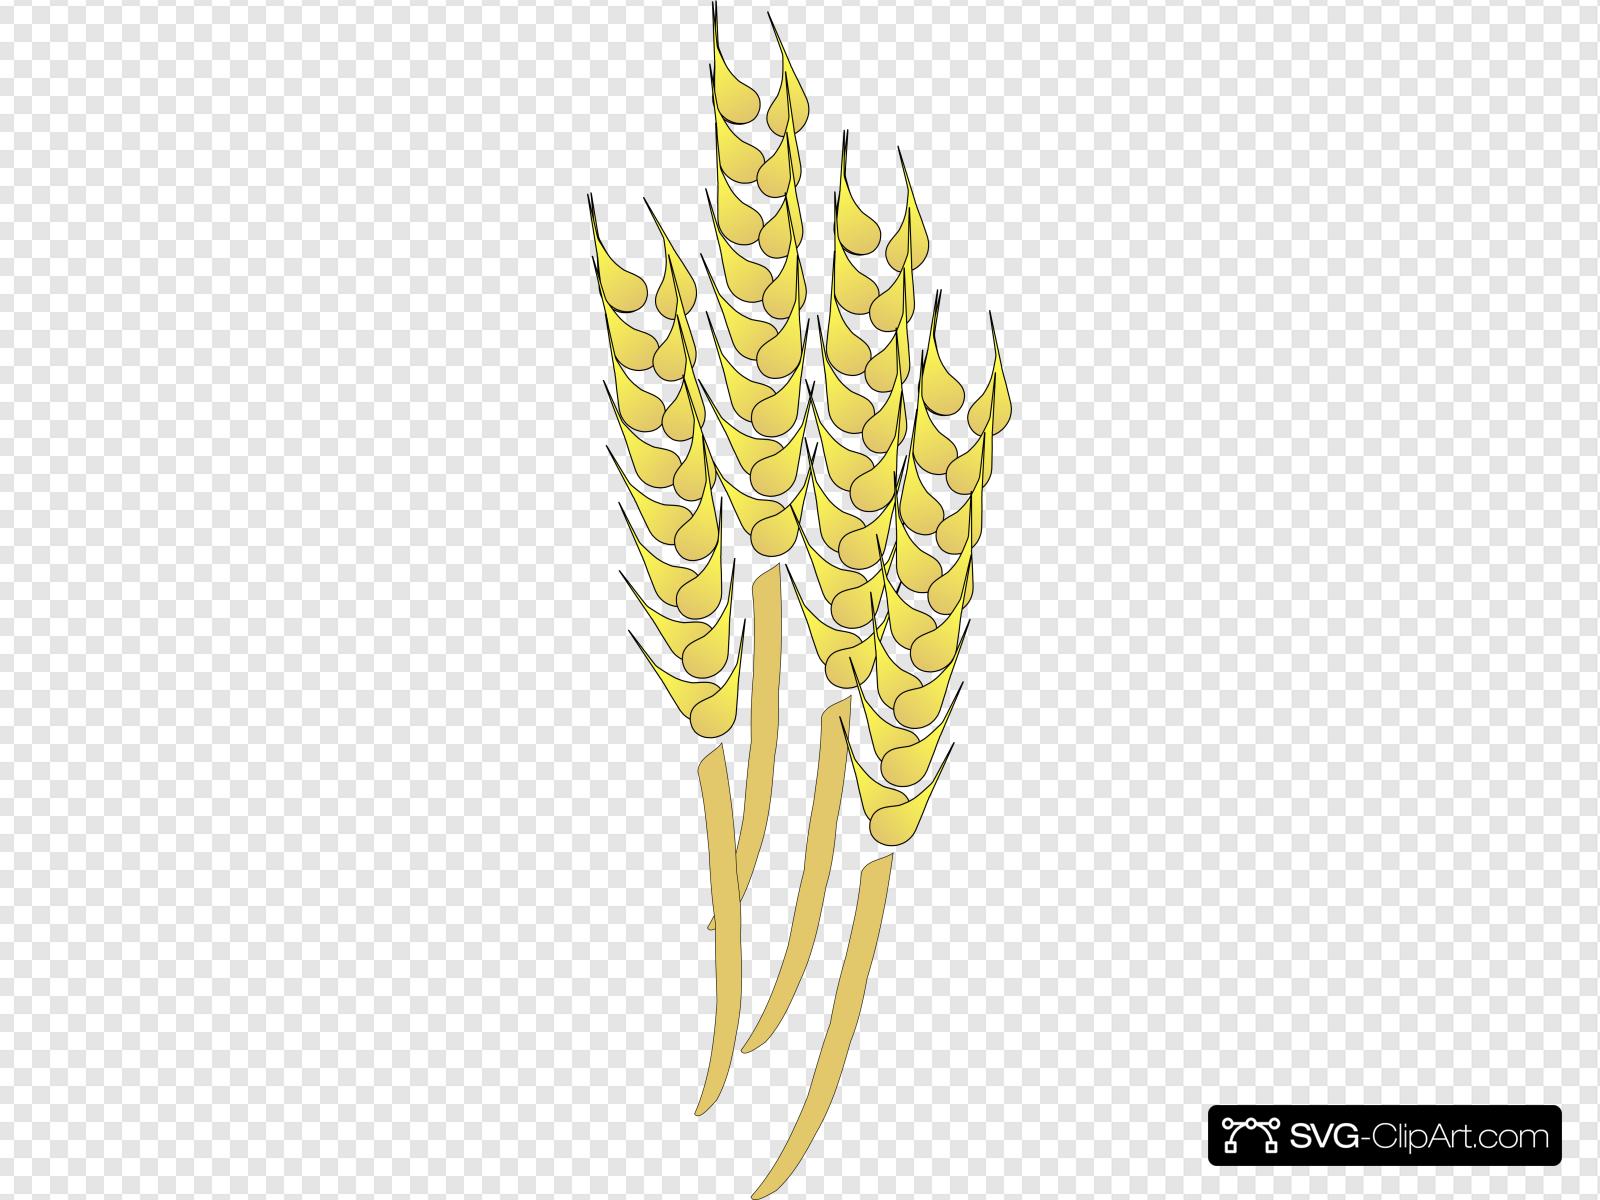 Wheat Clip art, Icon and SVG